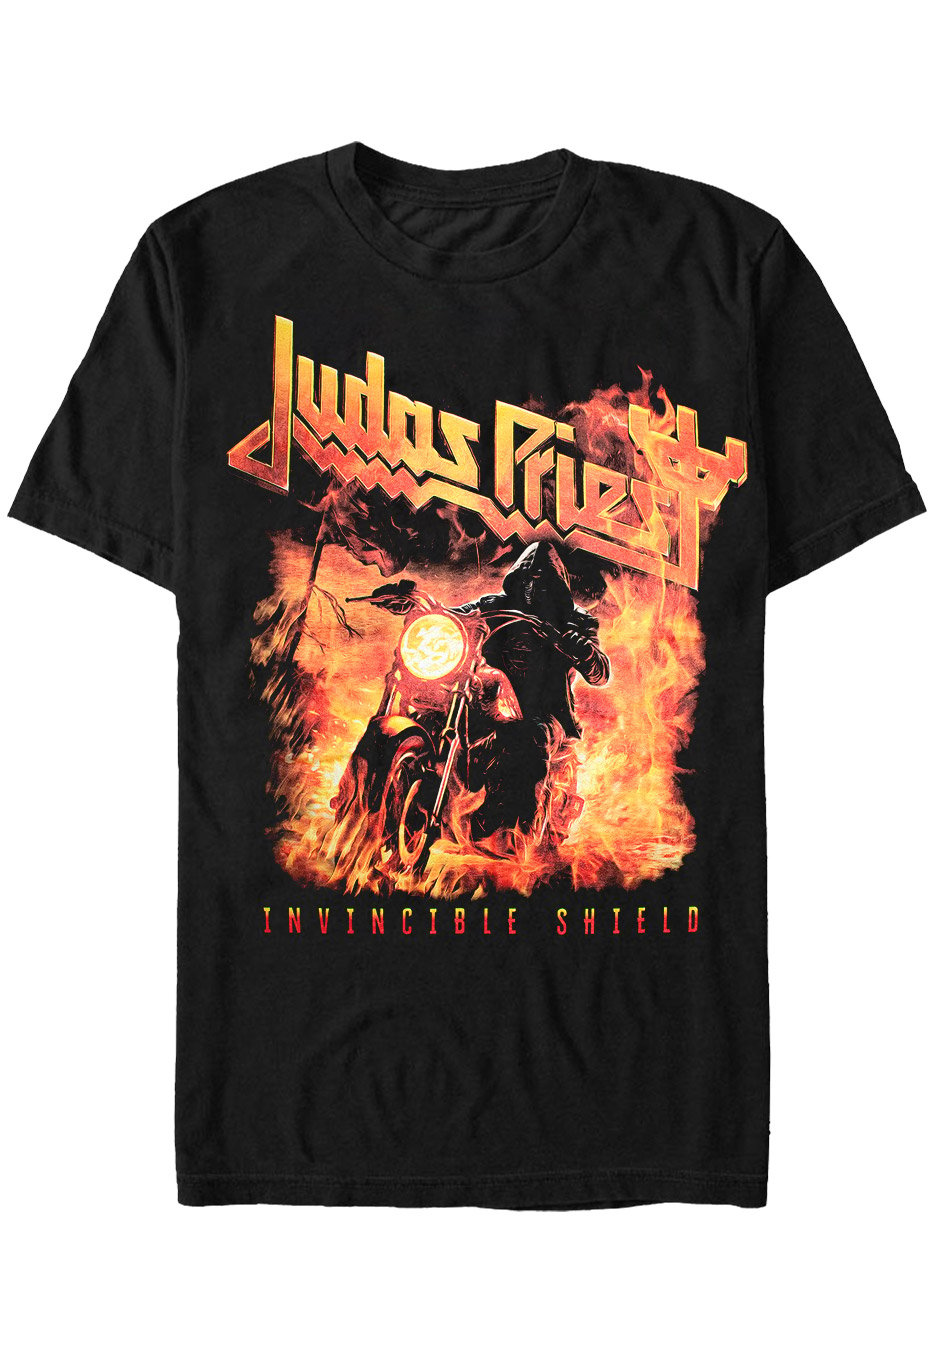 Judas Priest - Invincible Shield Biker - T-Shirt